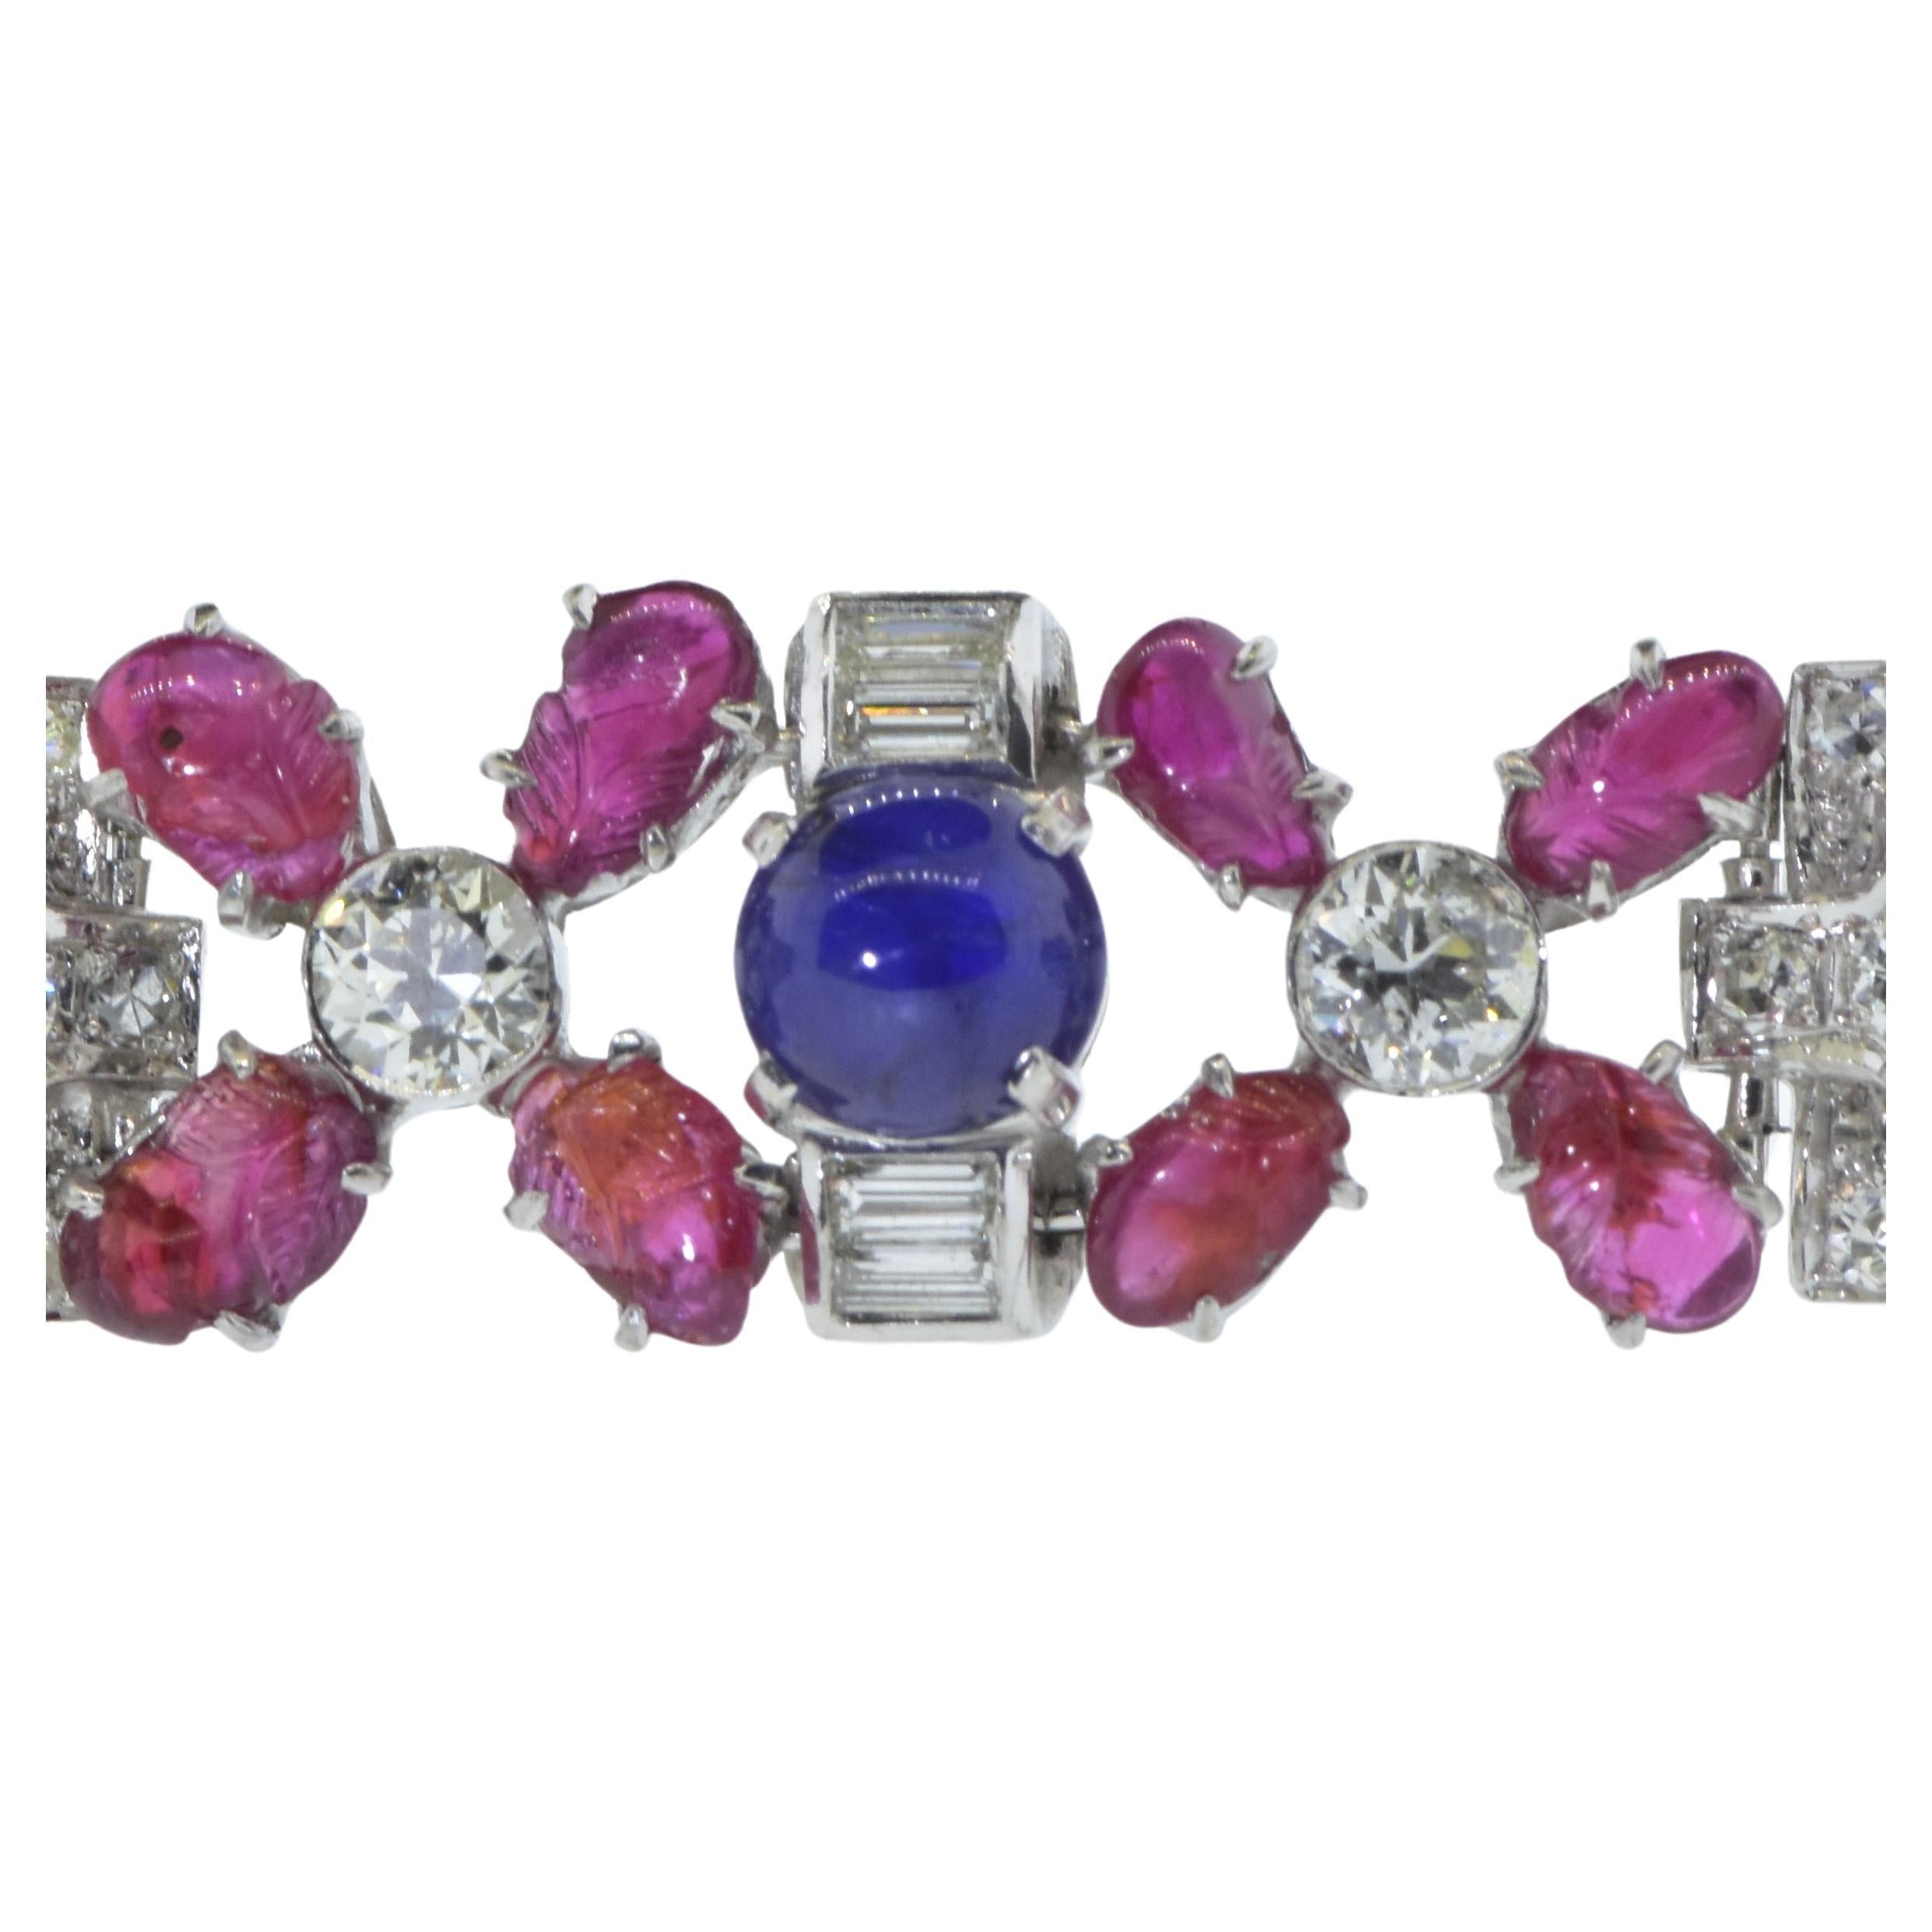 Mixed Cut Art Deco Tutti Frutti Platinum, Diamond, Ruby & Sapphire Bracelet c. 1922 For Sale